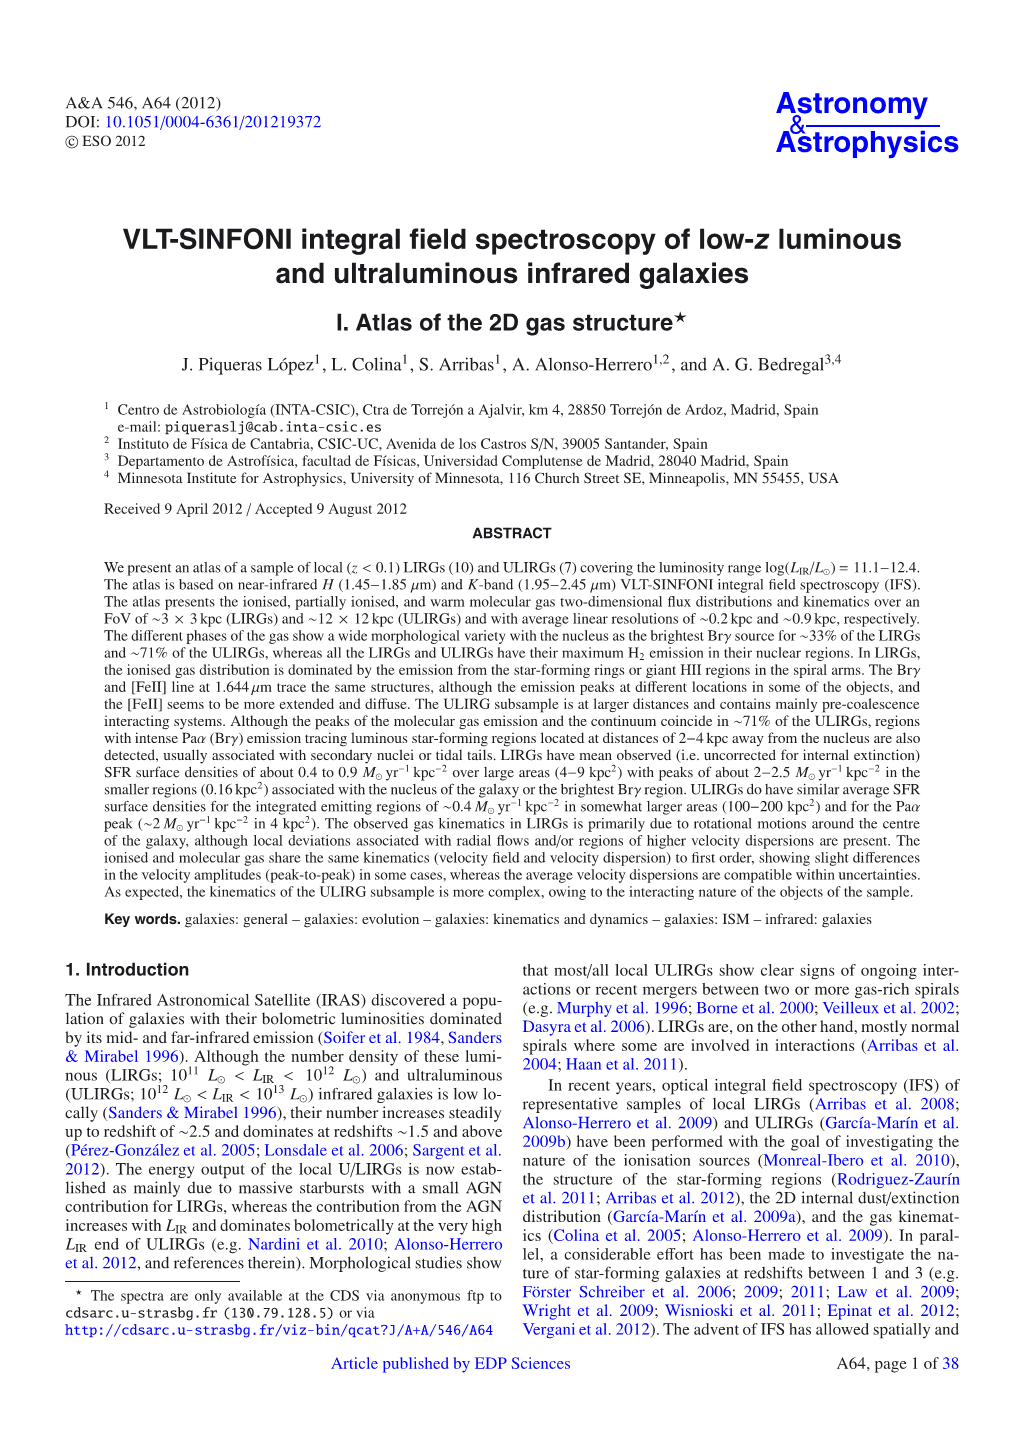 VLT-SINFONI Integral Field Spectroscopy of Low-Z Luminous And